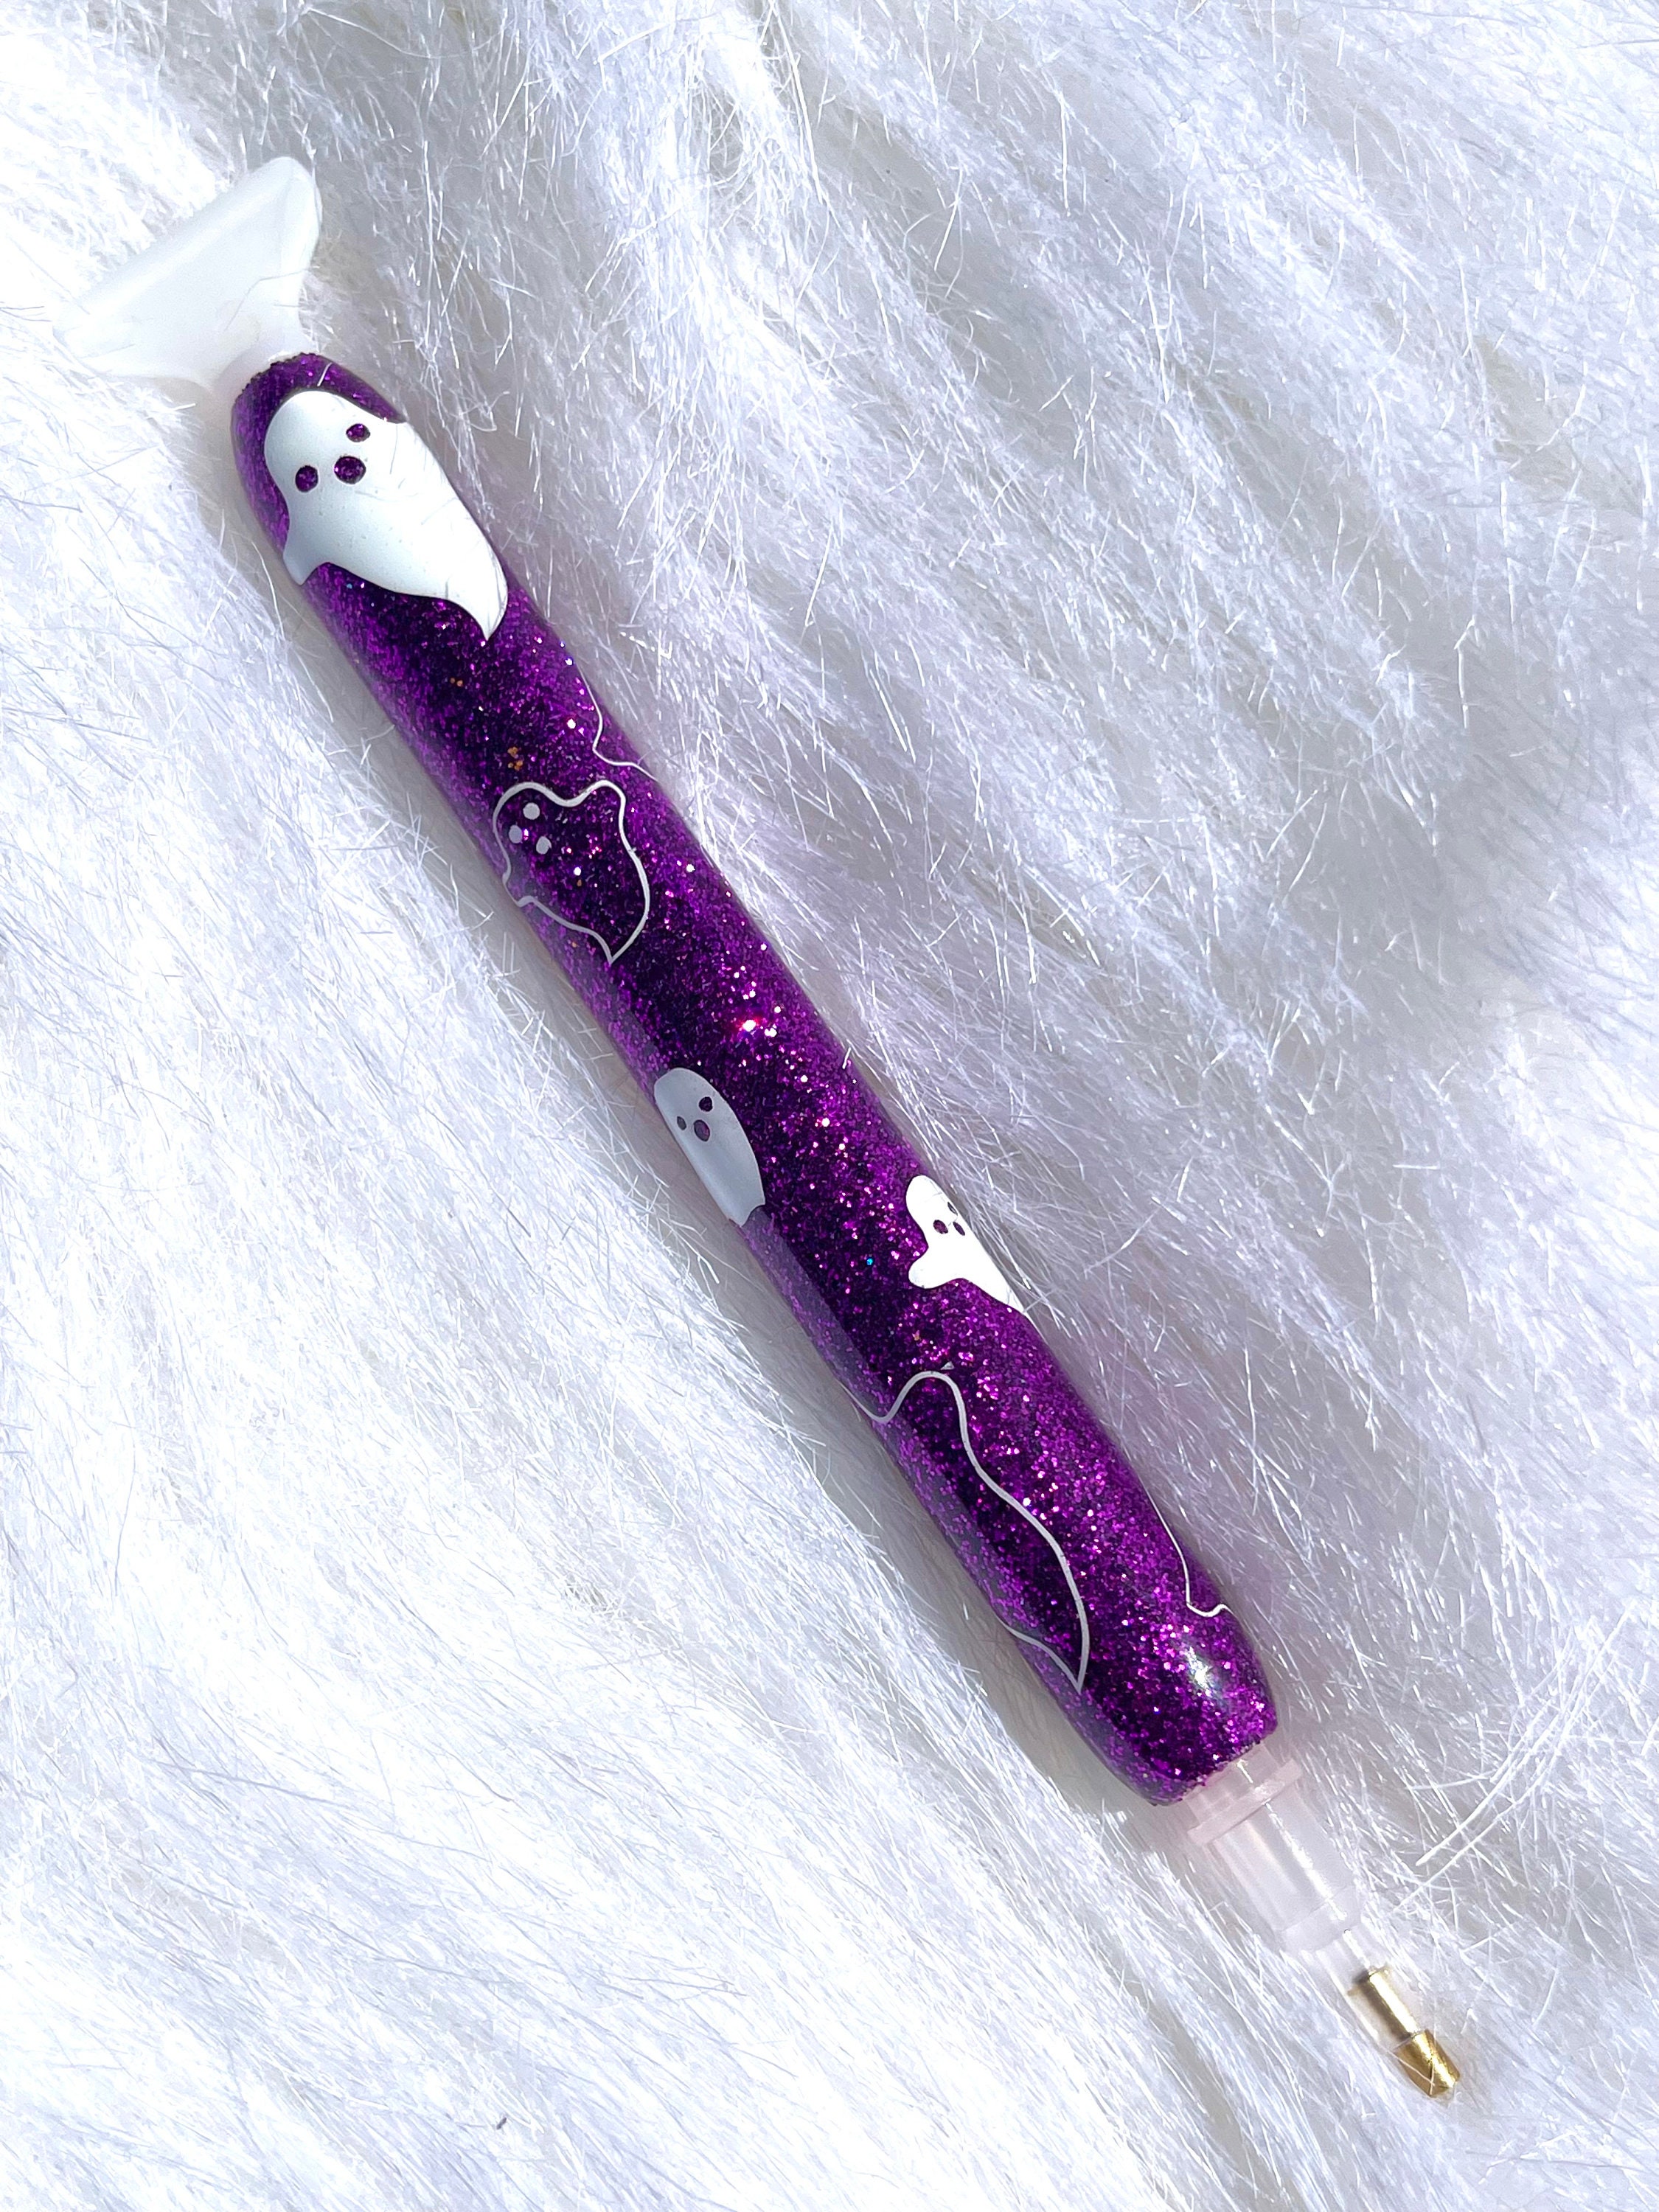 Diamond Painting Pen, Diamond Art Tools Accessories Pen,ergonomic Diamond  Art Drill Pen With Wax and Tips colorful Flower 